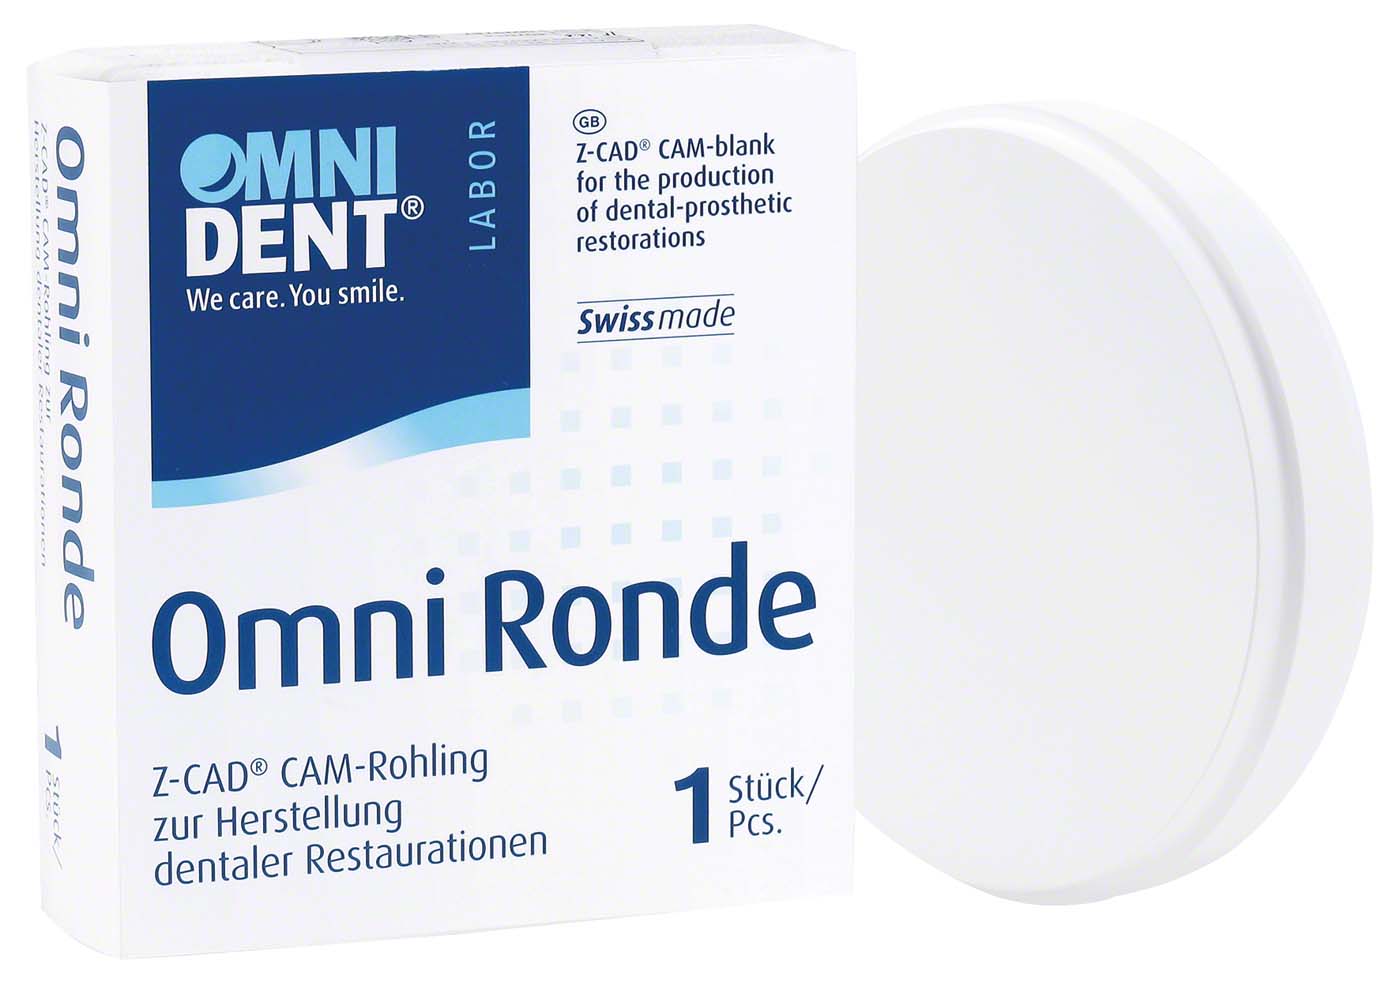 Omni Z-CAD One4All Ronden OMNIDENT